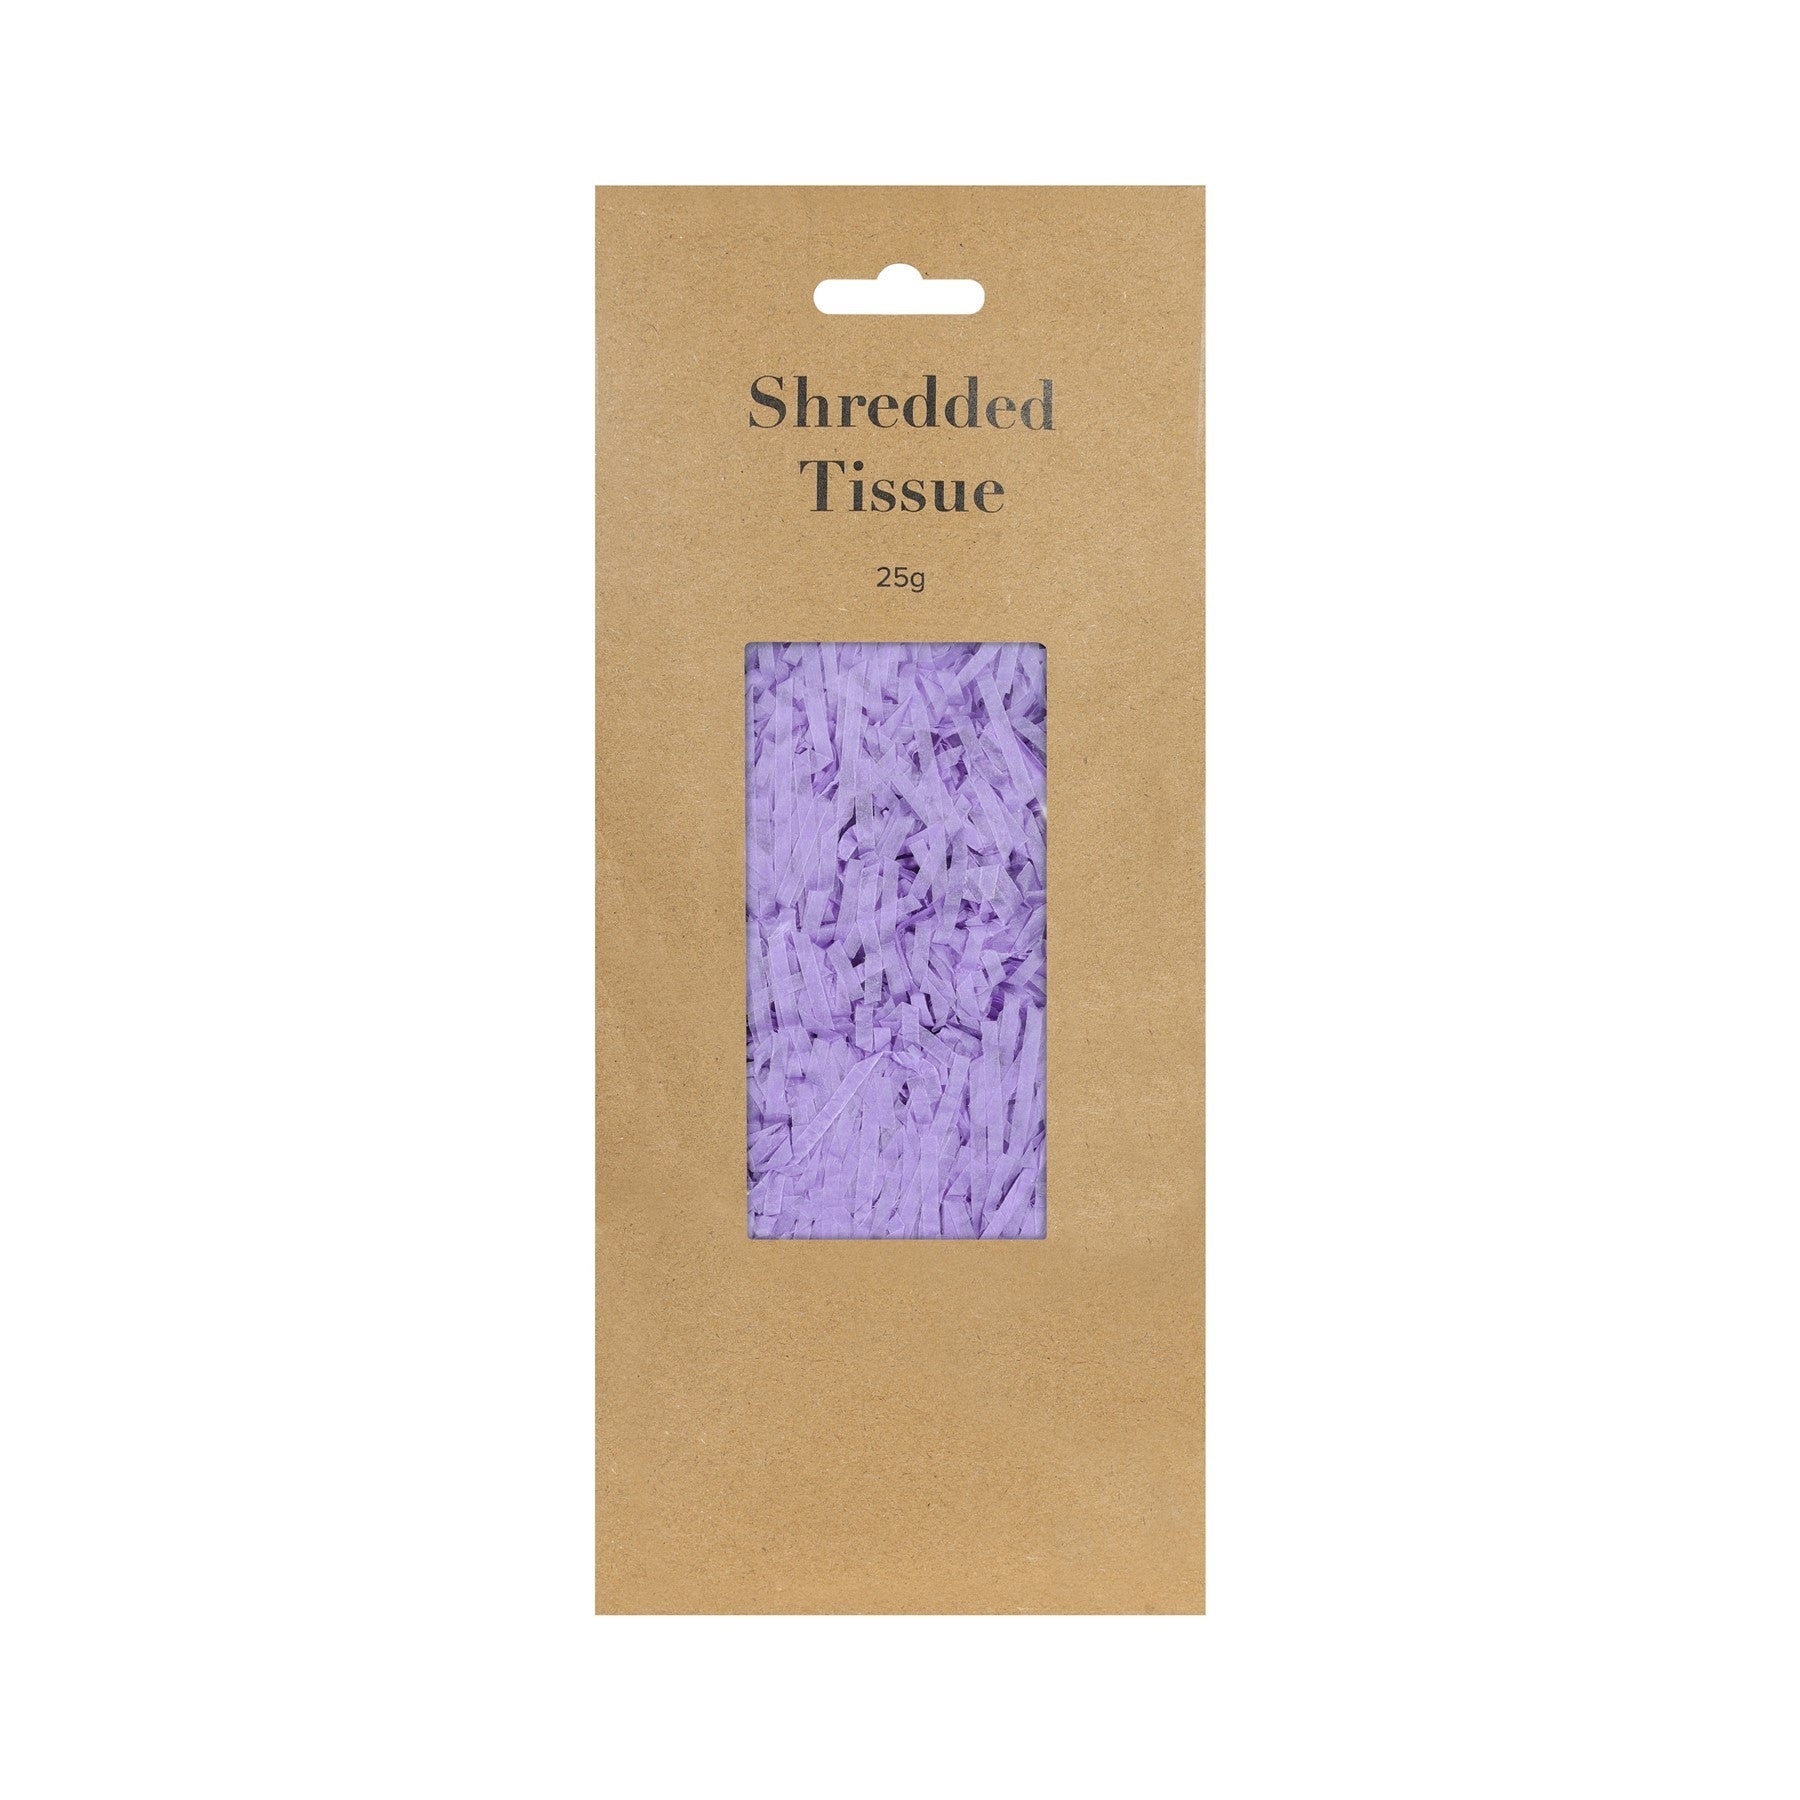 View Lilac Shredded Tissue 25g information